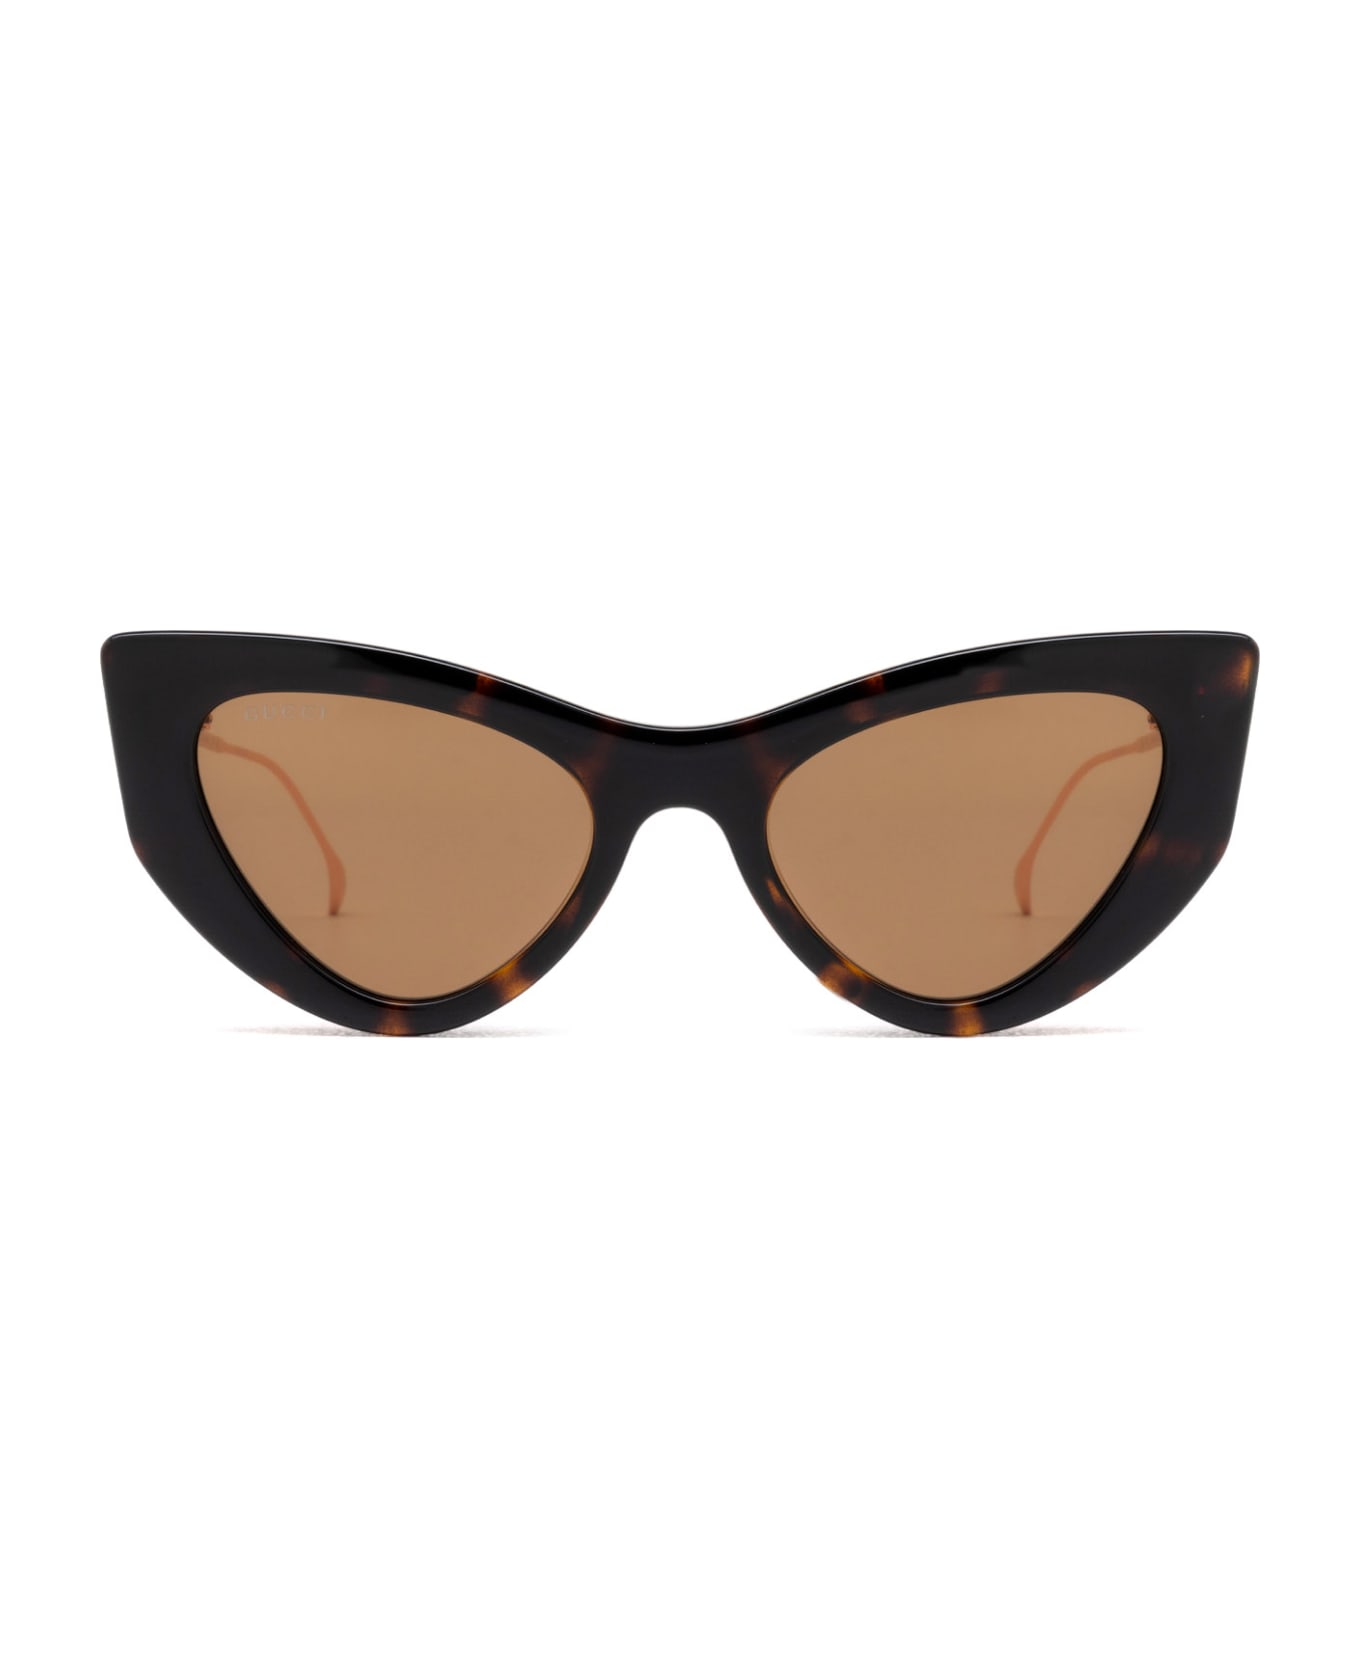 Gucci Eyewear Gg1565s Havana Sunglasses - Havana